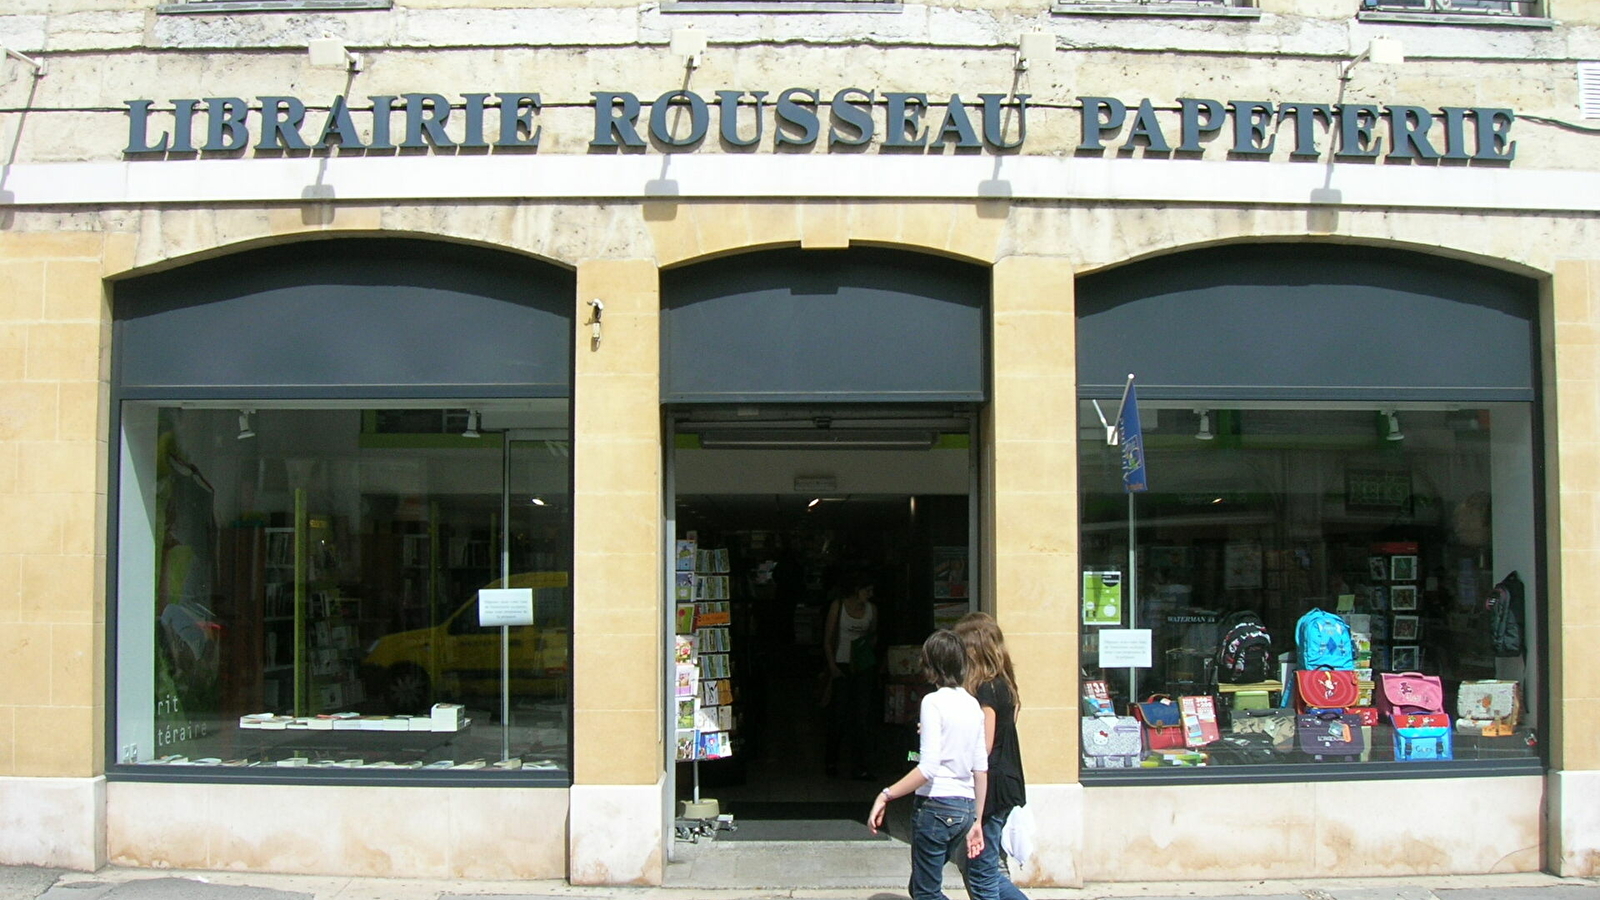 Librairie / Papeterie - Rousseau